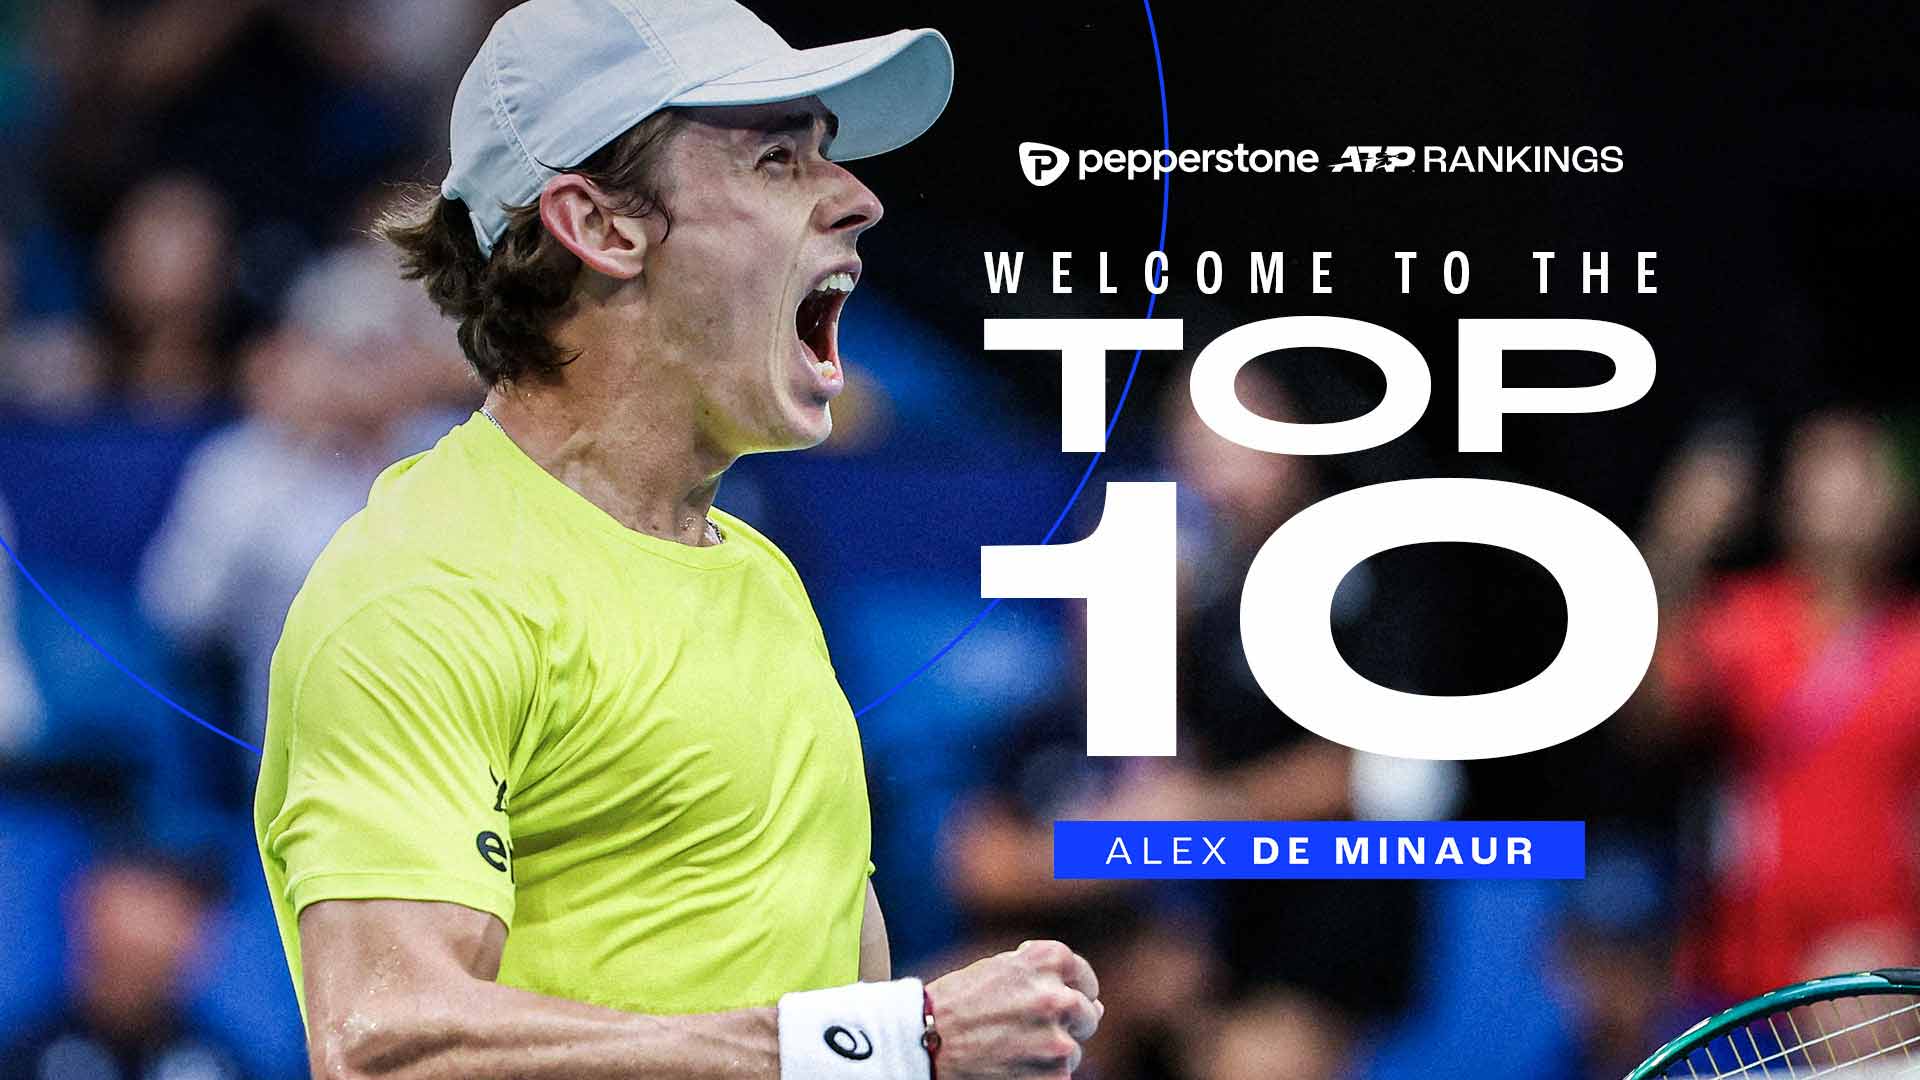 Alex de Minaur climbs to a career-high World No. 10 in the Pepperstone ATP Rankings.